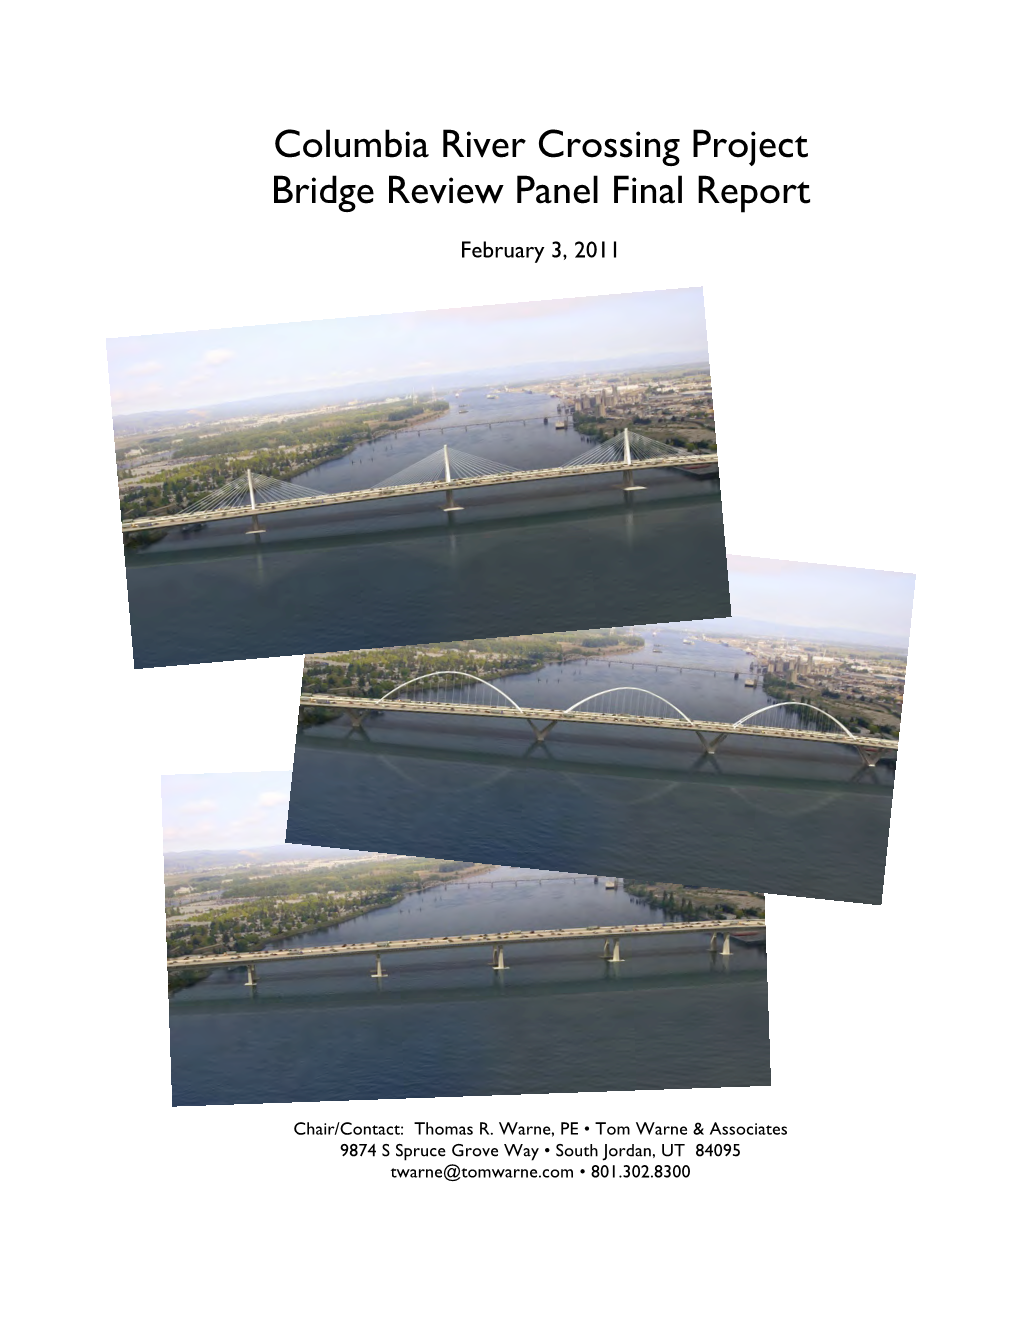 Columbia River Crossing Project Bridge Review Panel Final Report